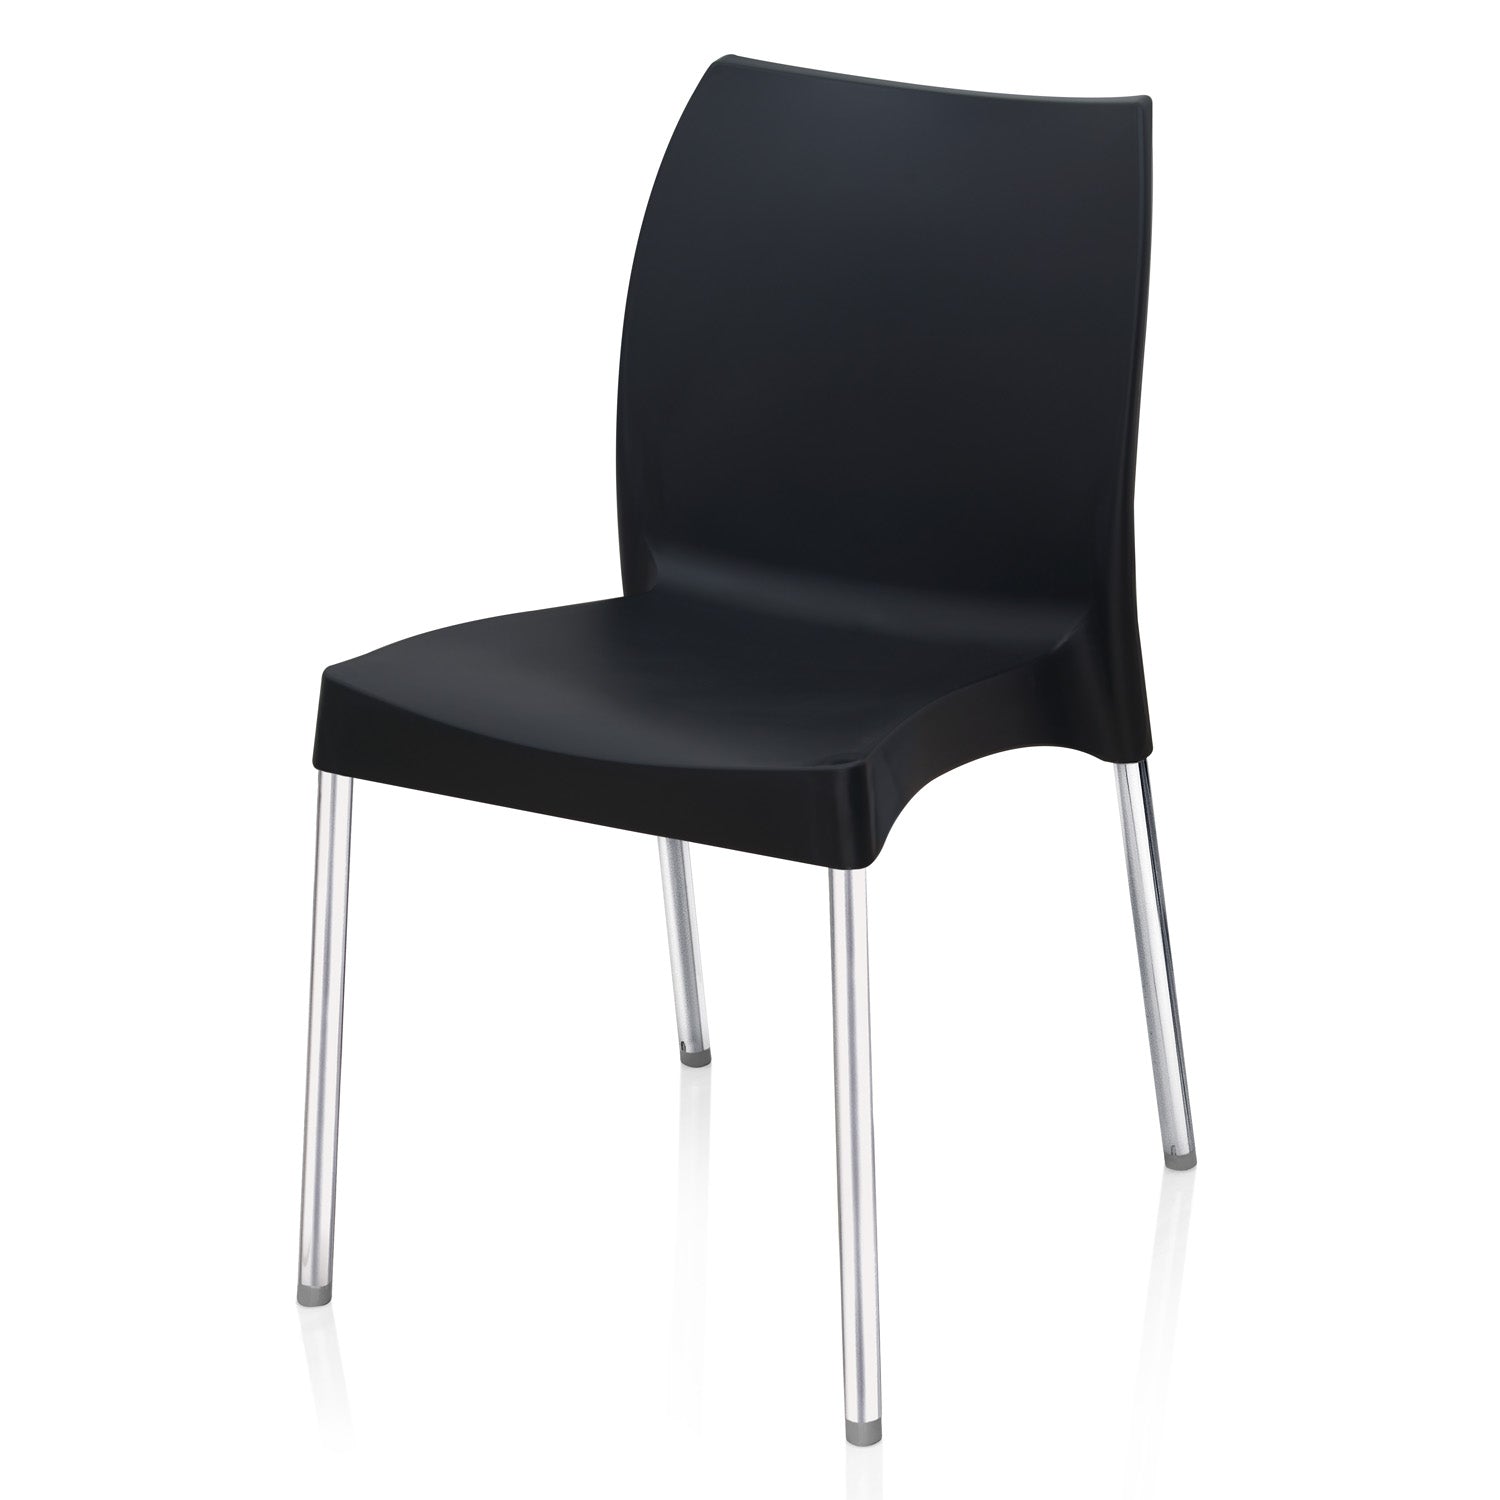 Nilkamal Novella 07 Chair (Iron Black)